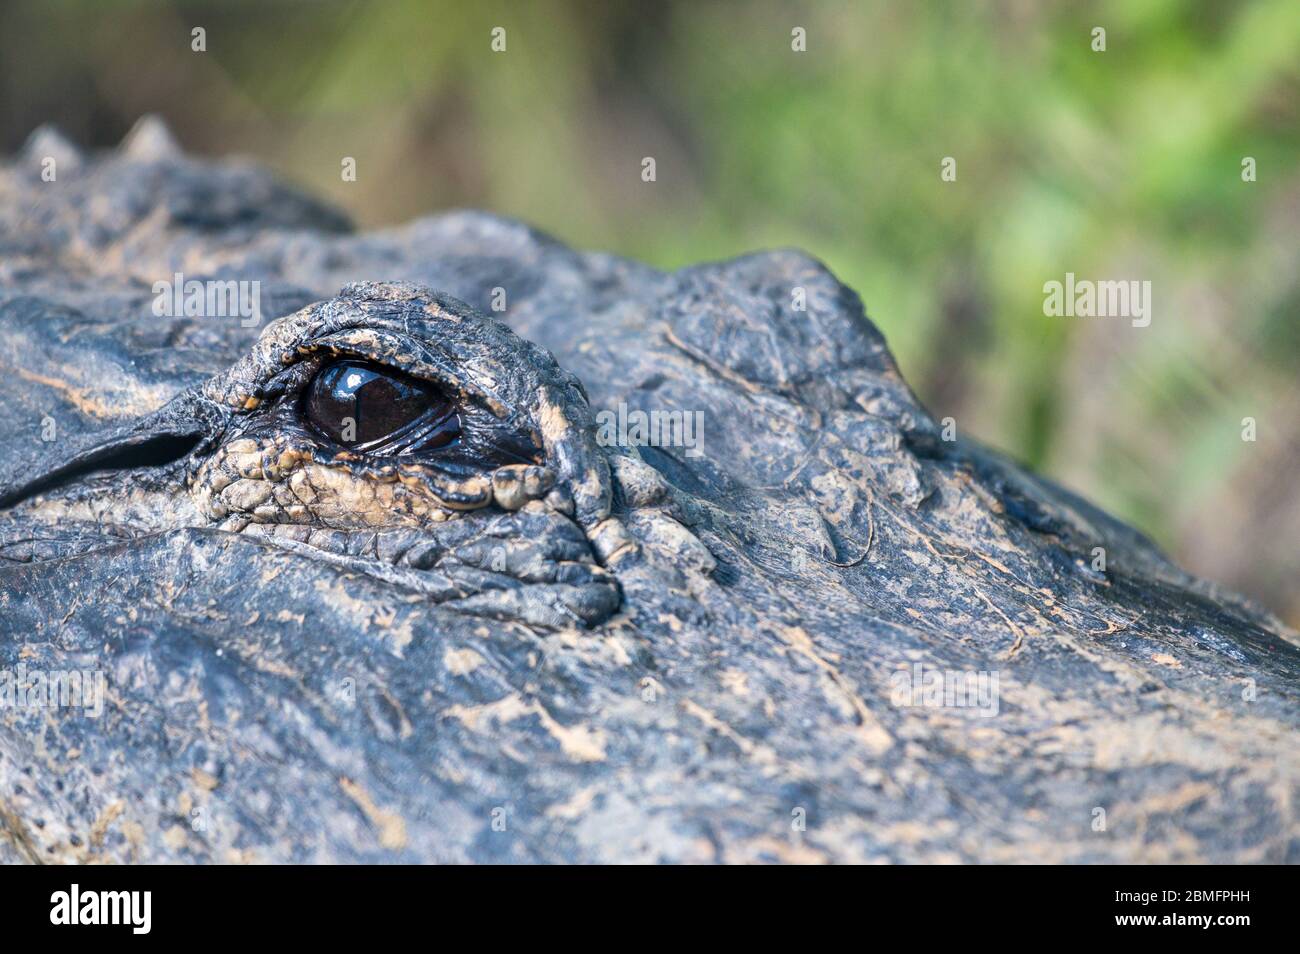 American alligator (Alligator mississippiensis) on ground in Everglades National Park, Florida, USA Stock Photo